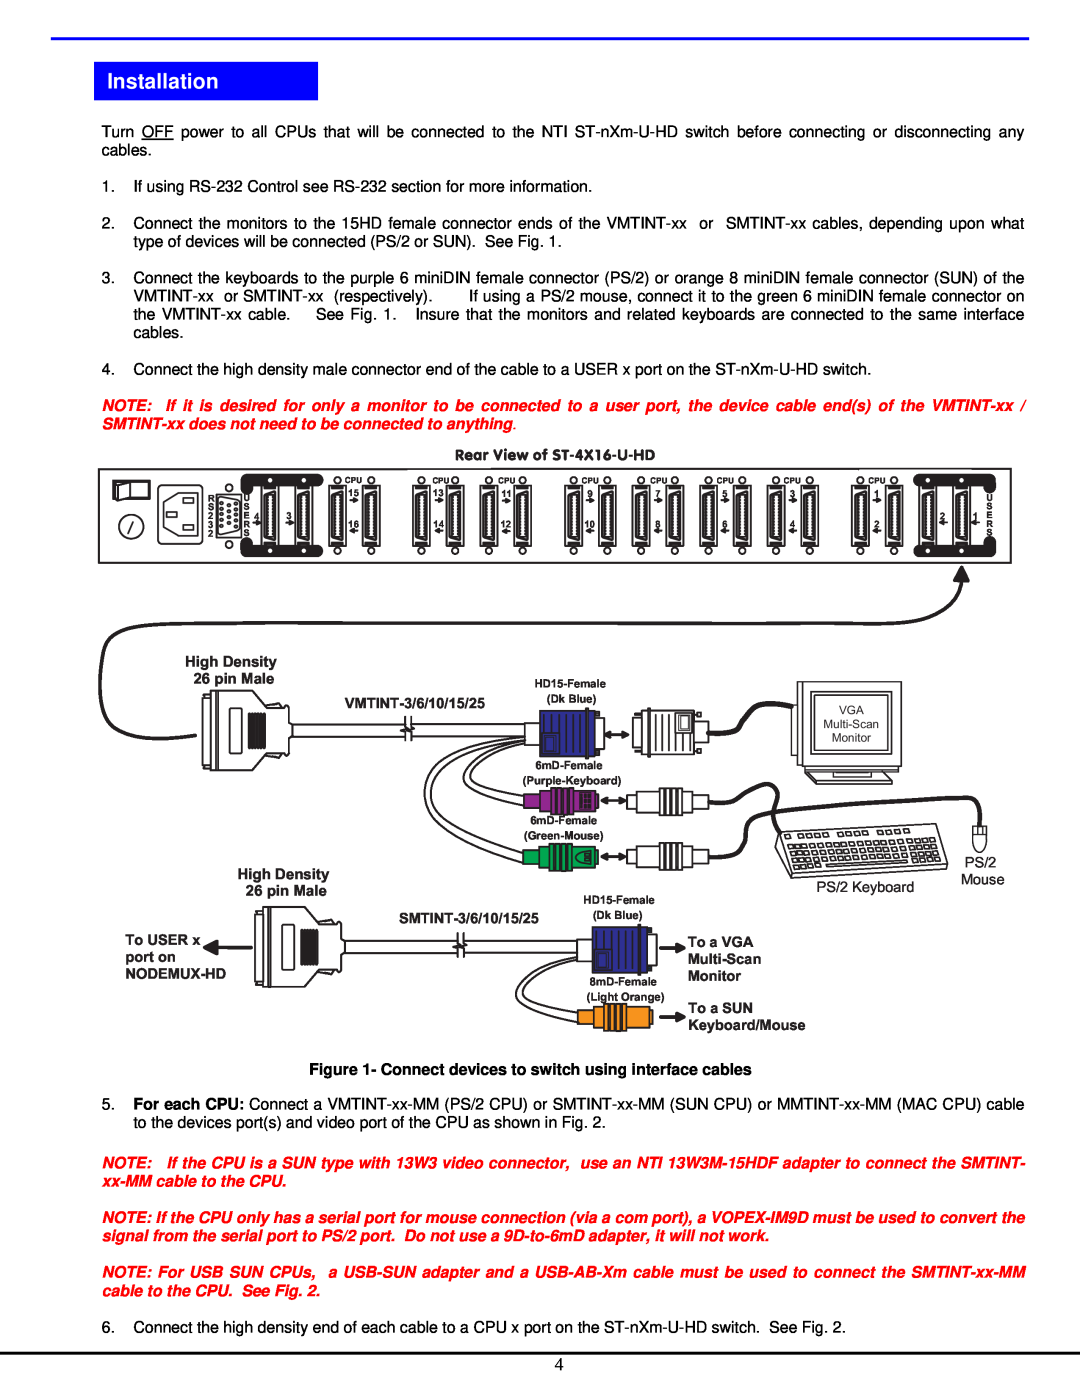 Network Technologies ST-NXM-U-HD manual Installation, RearViewofST-4X16-U-HD 